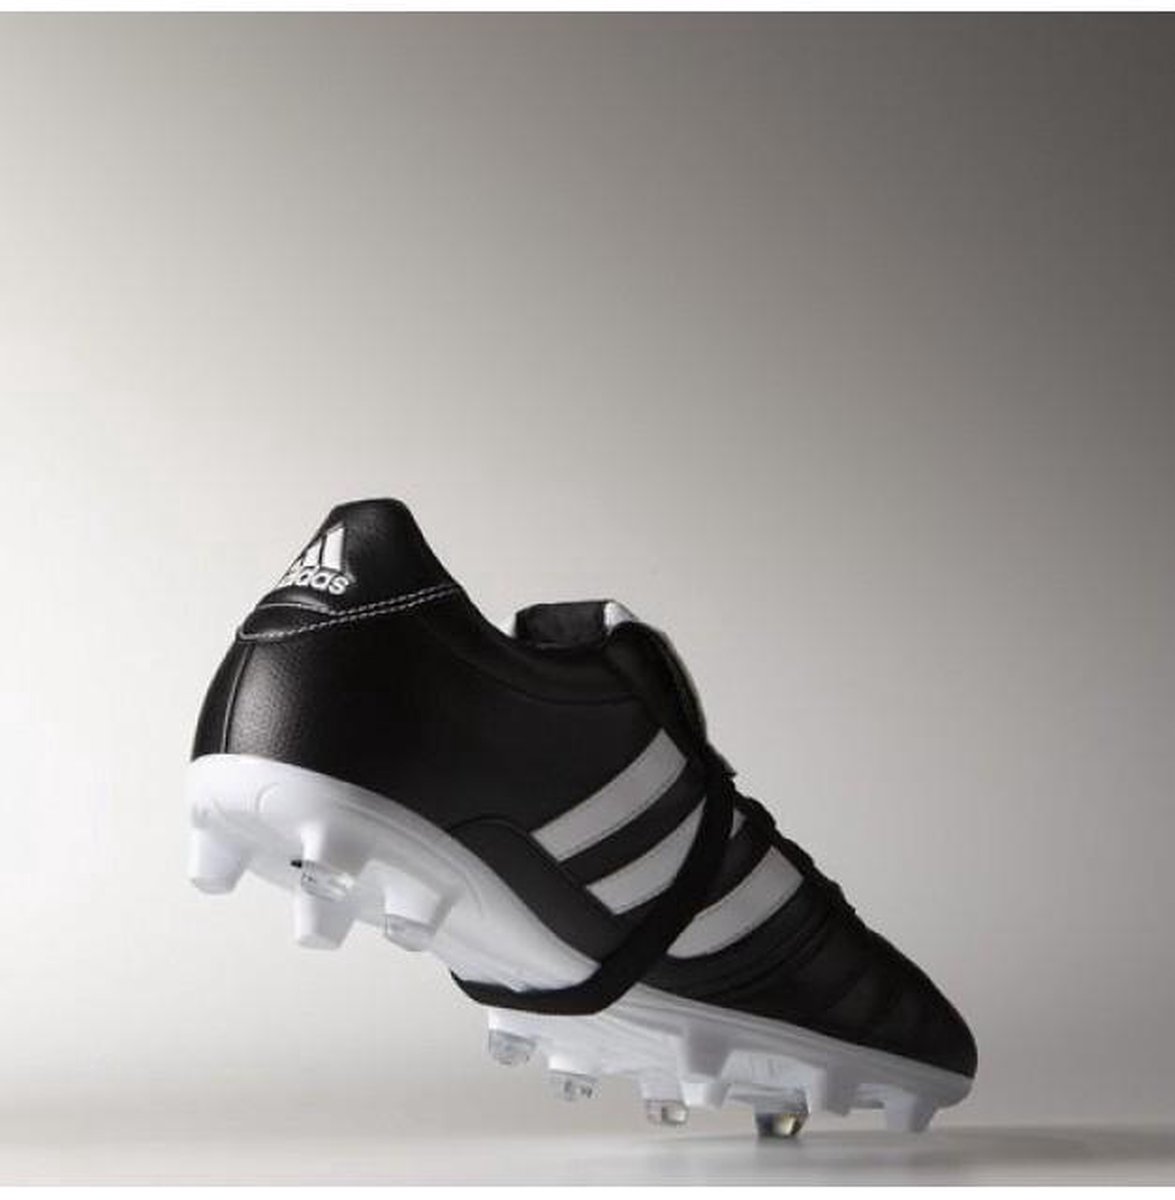 Adidas Voetbalschoenen Gloro FG - Unisex - Zwart/Wit - Maat 40 2/3 | bol.com